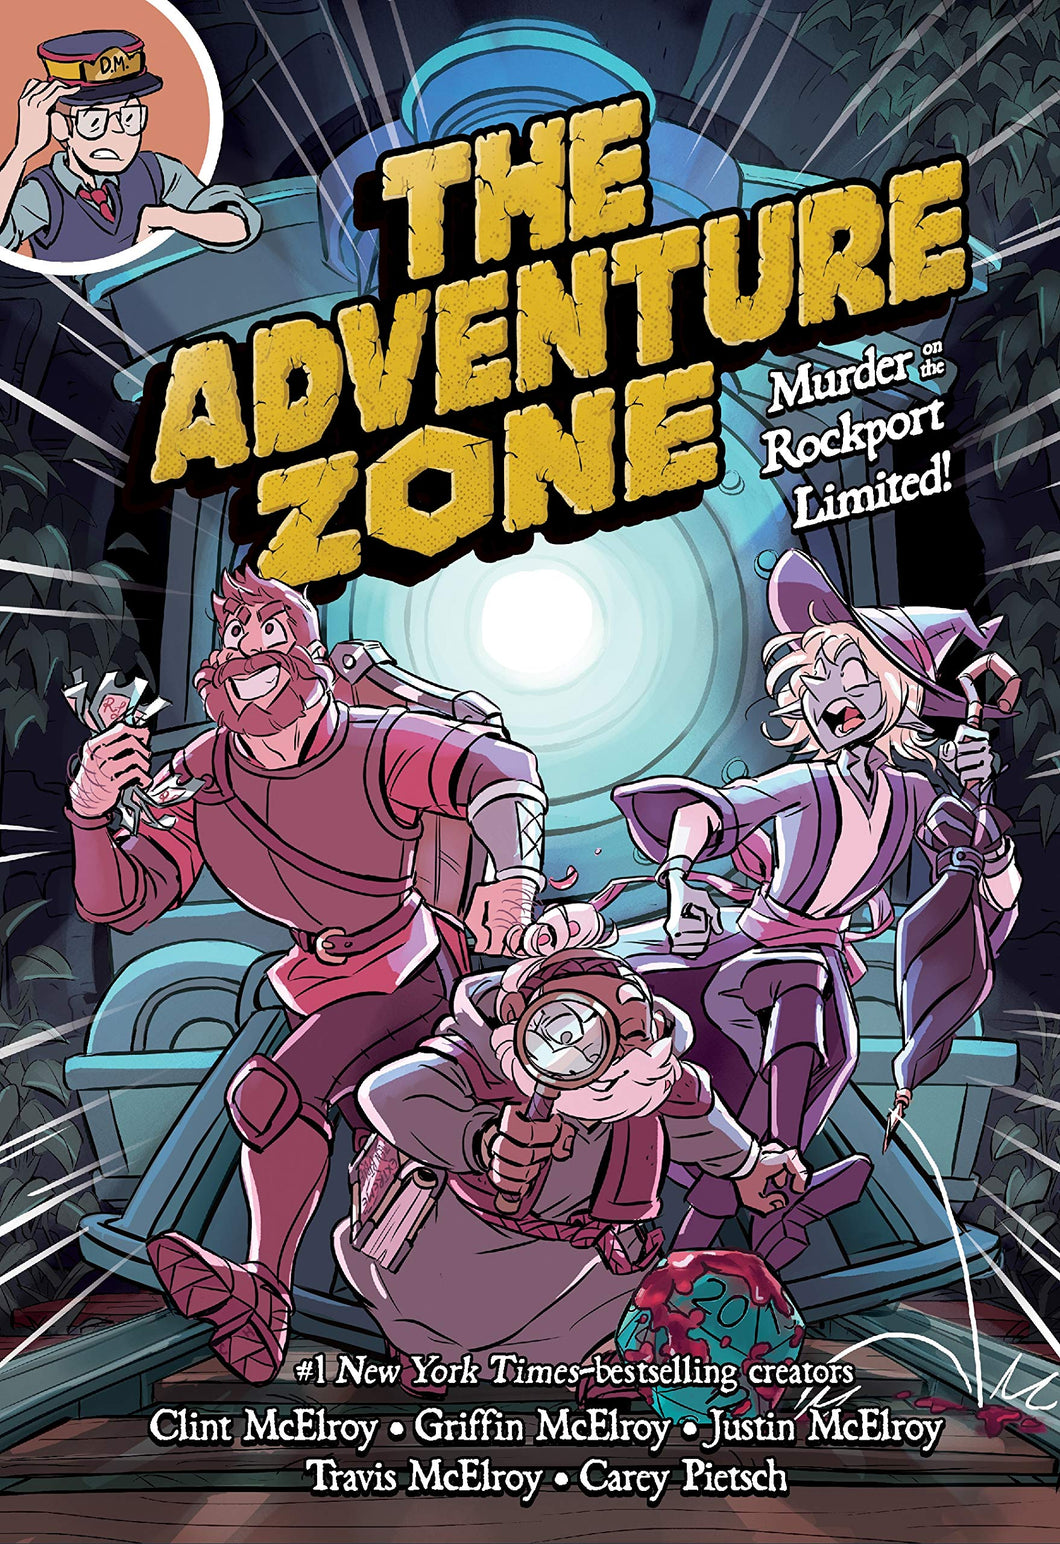 Adventure Zone Volume 2 Murder on the Rockport Limited!